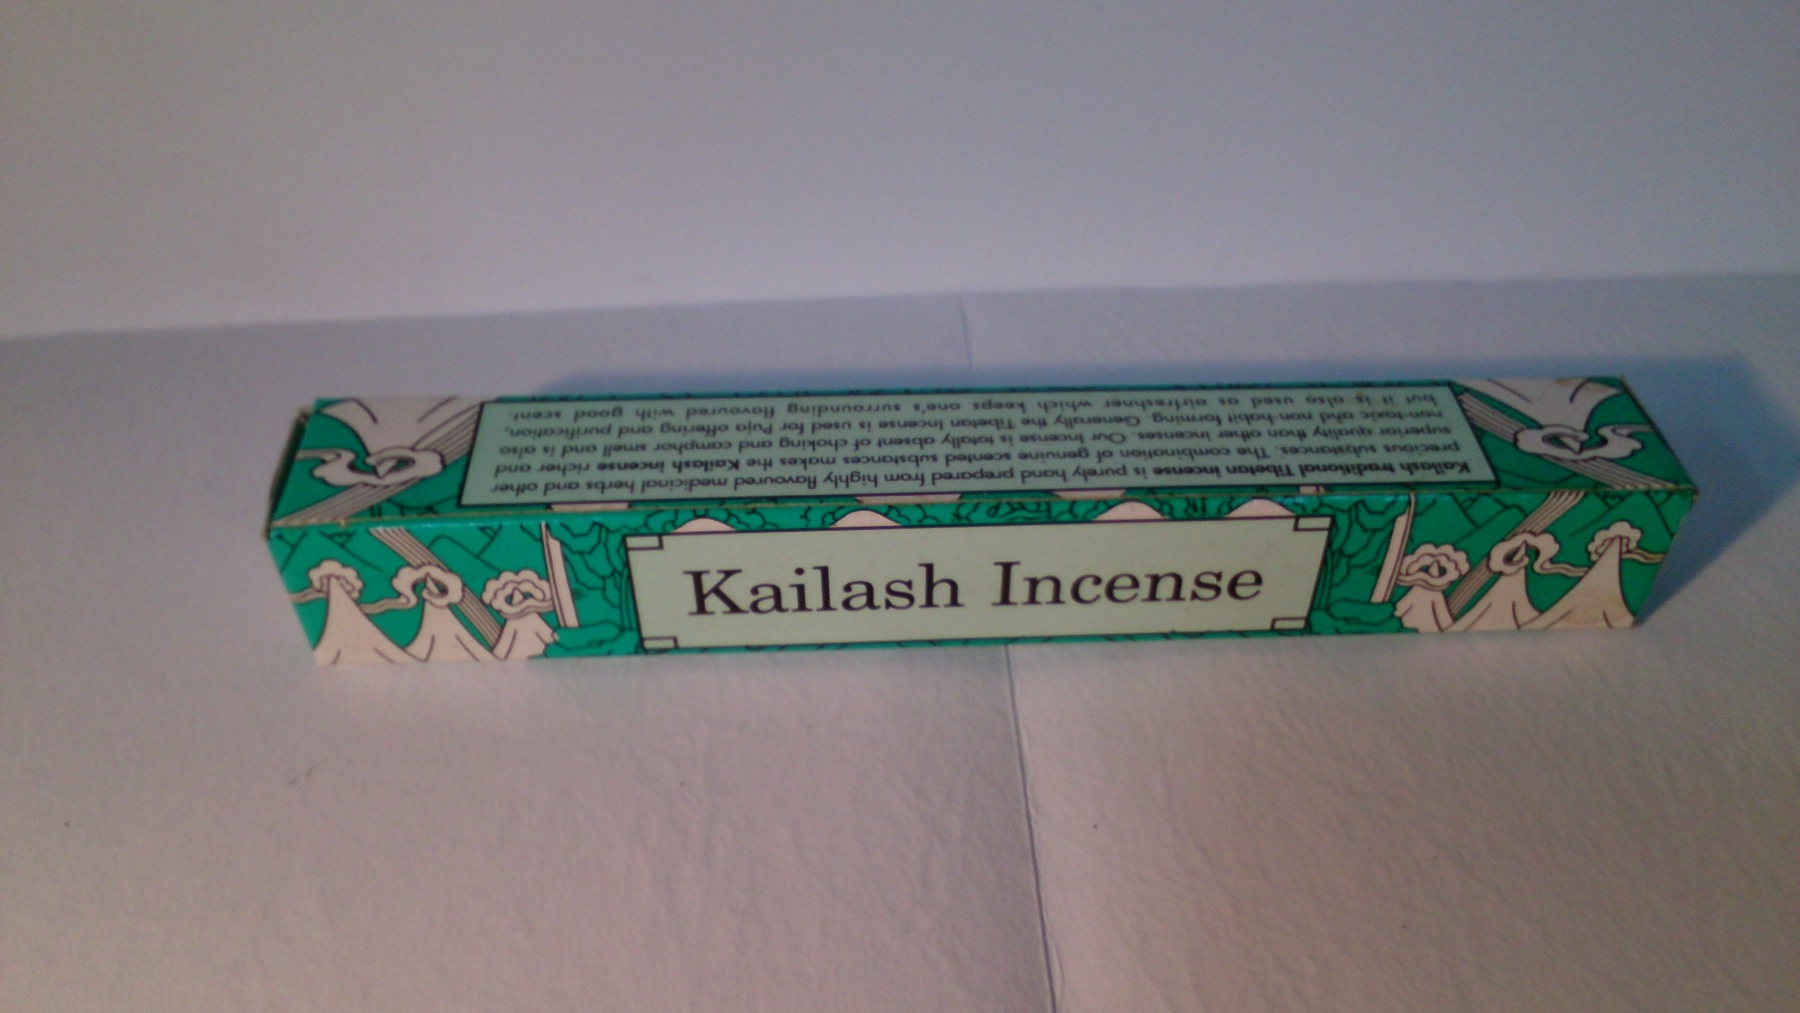 Kailash incense